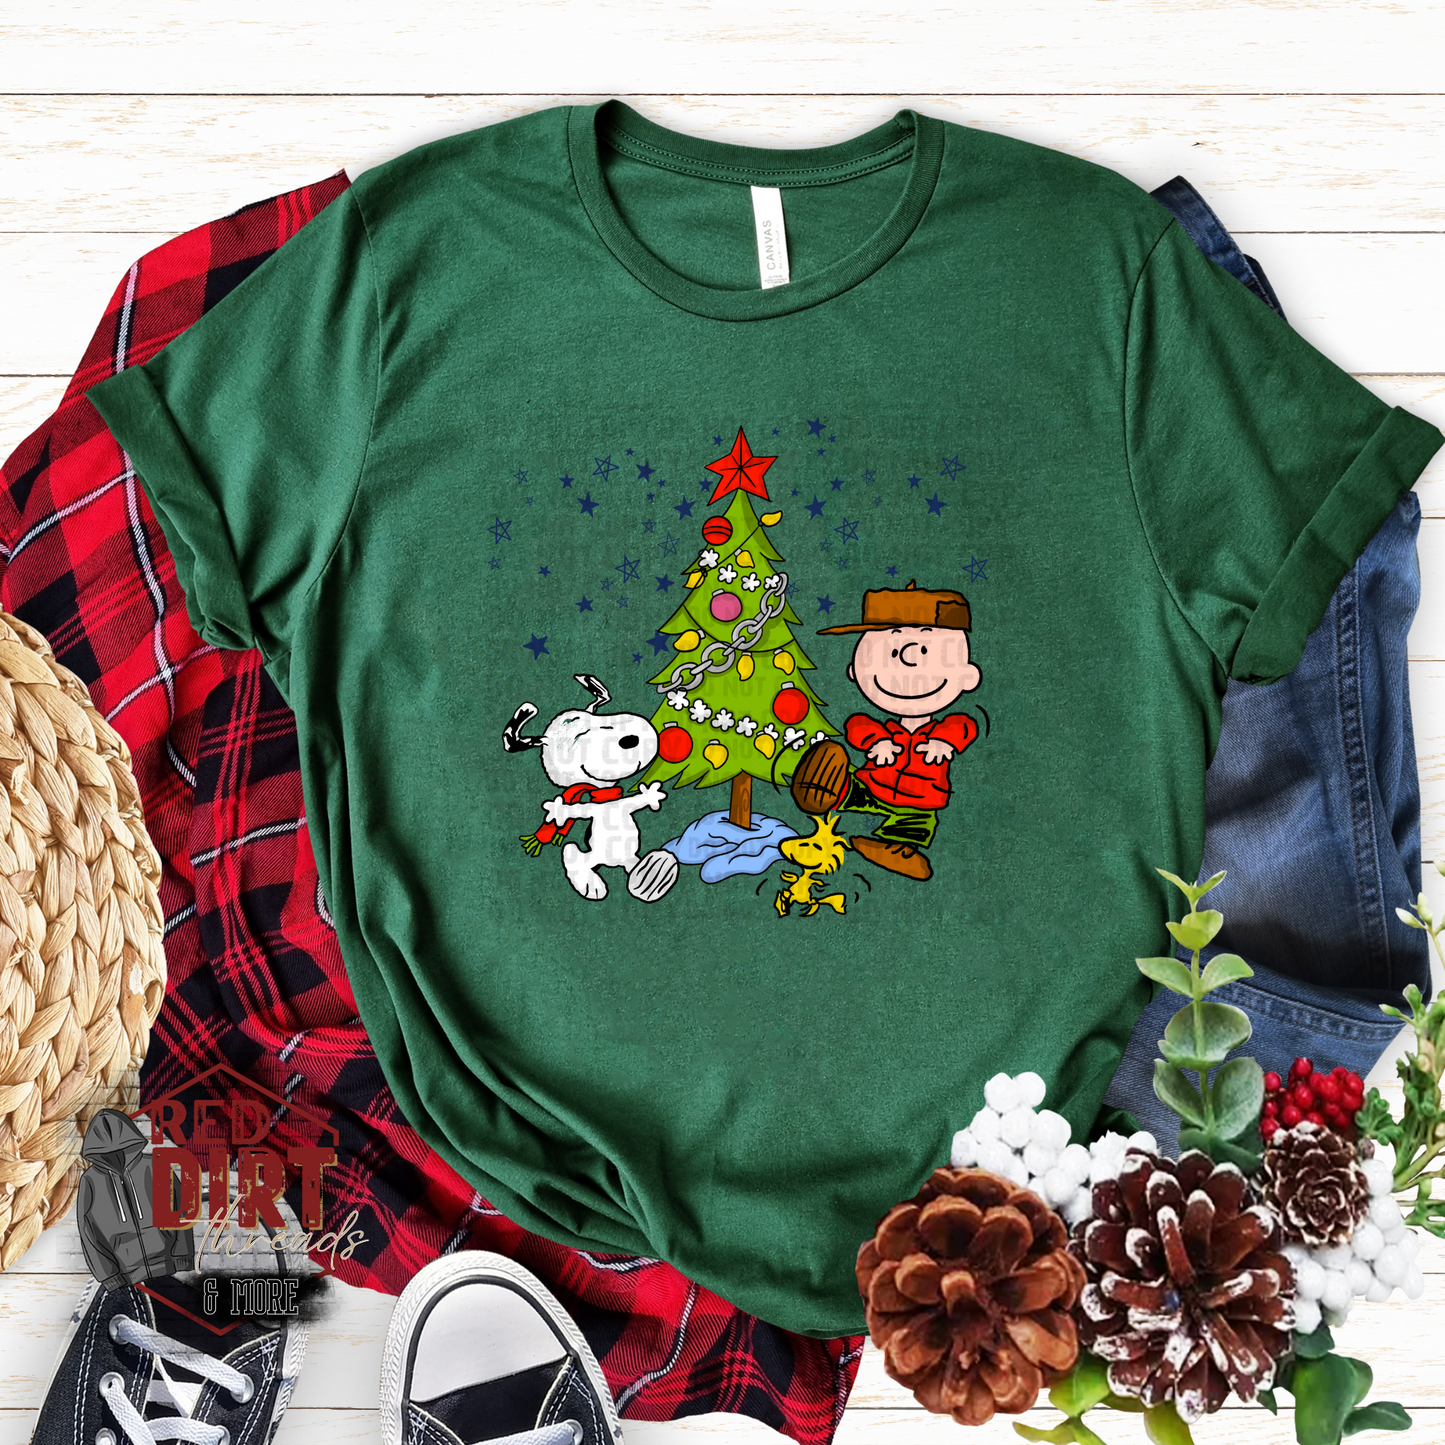 CB Christmas T-Shirt | Trendy Christmas Movie Shirt | Fast Shipping | Super Soft Shirts for Women/Kid's